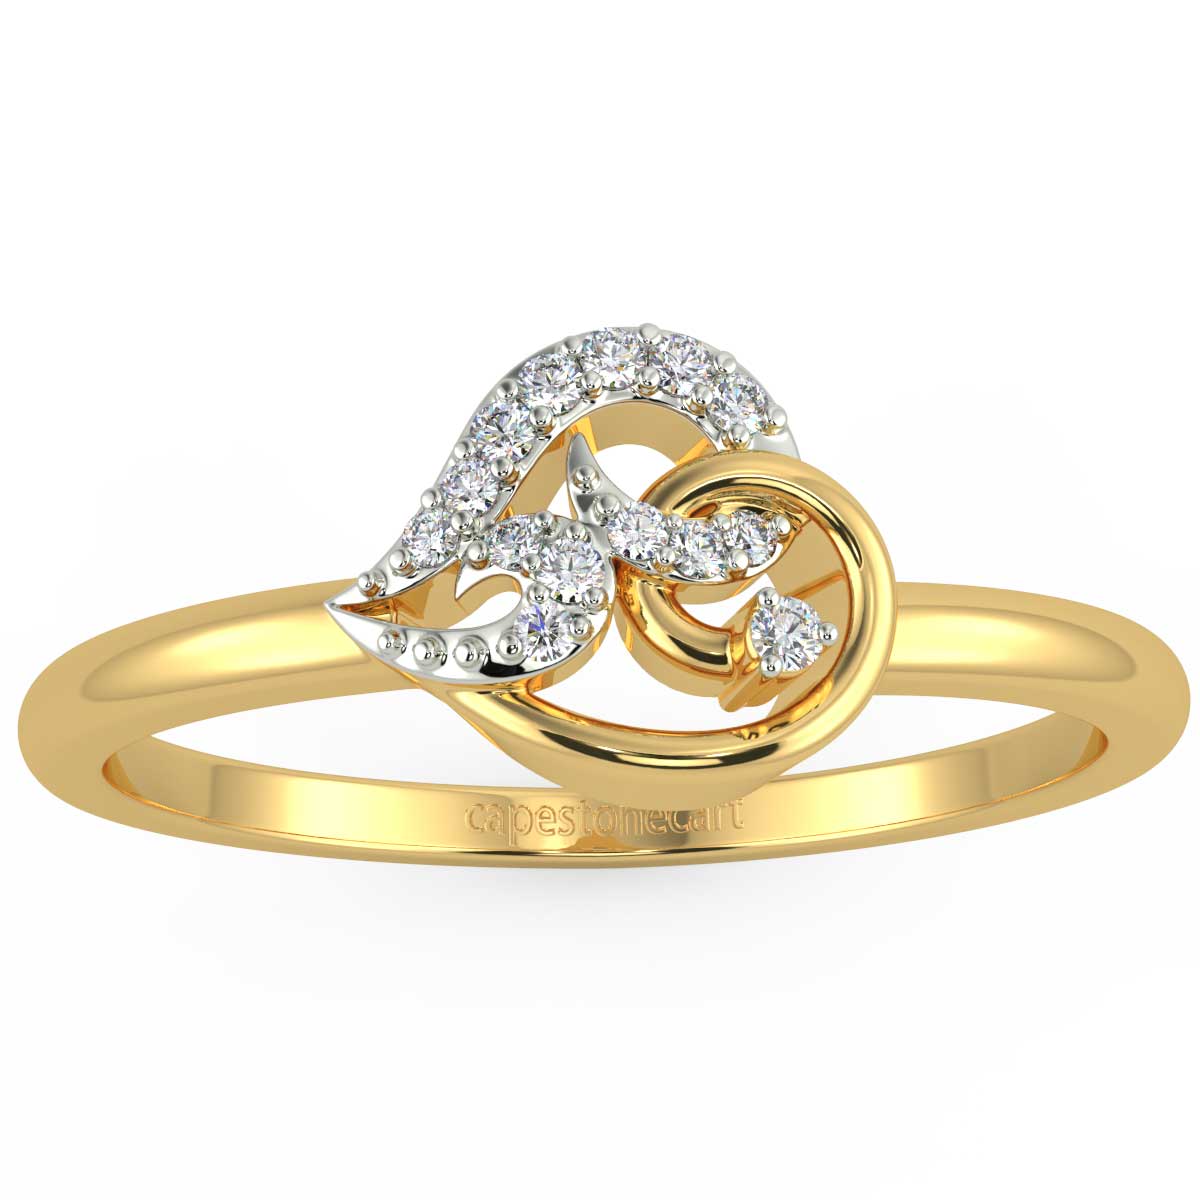 Camilla ring – Capestonecart